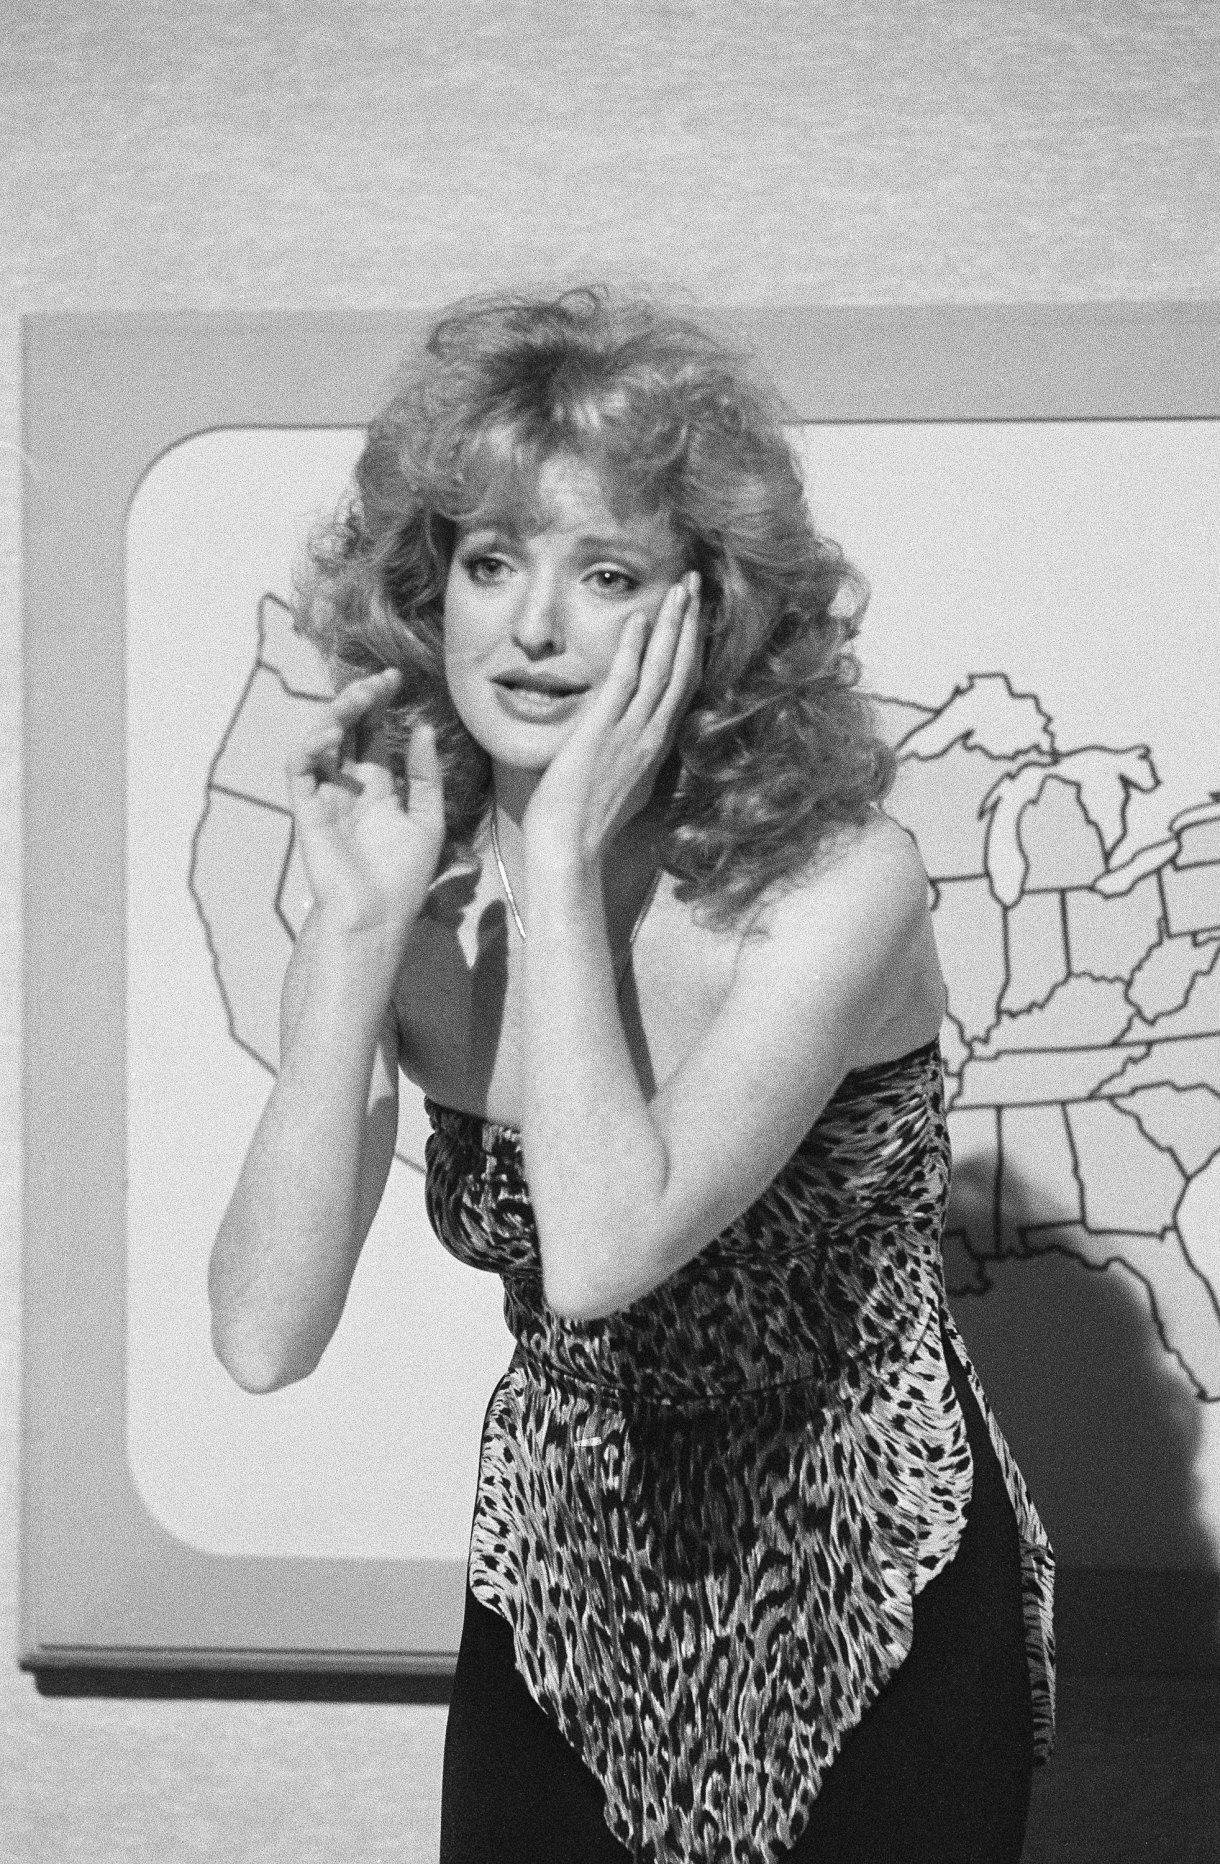 SATURDAY NIGHT LIVE -- "SNL News Break" Episode 4 -- Air Date 10/31/1981 --Pictured: Christine Ebersole -- 